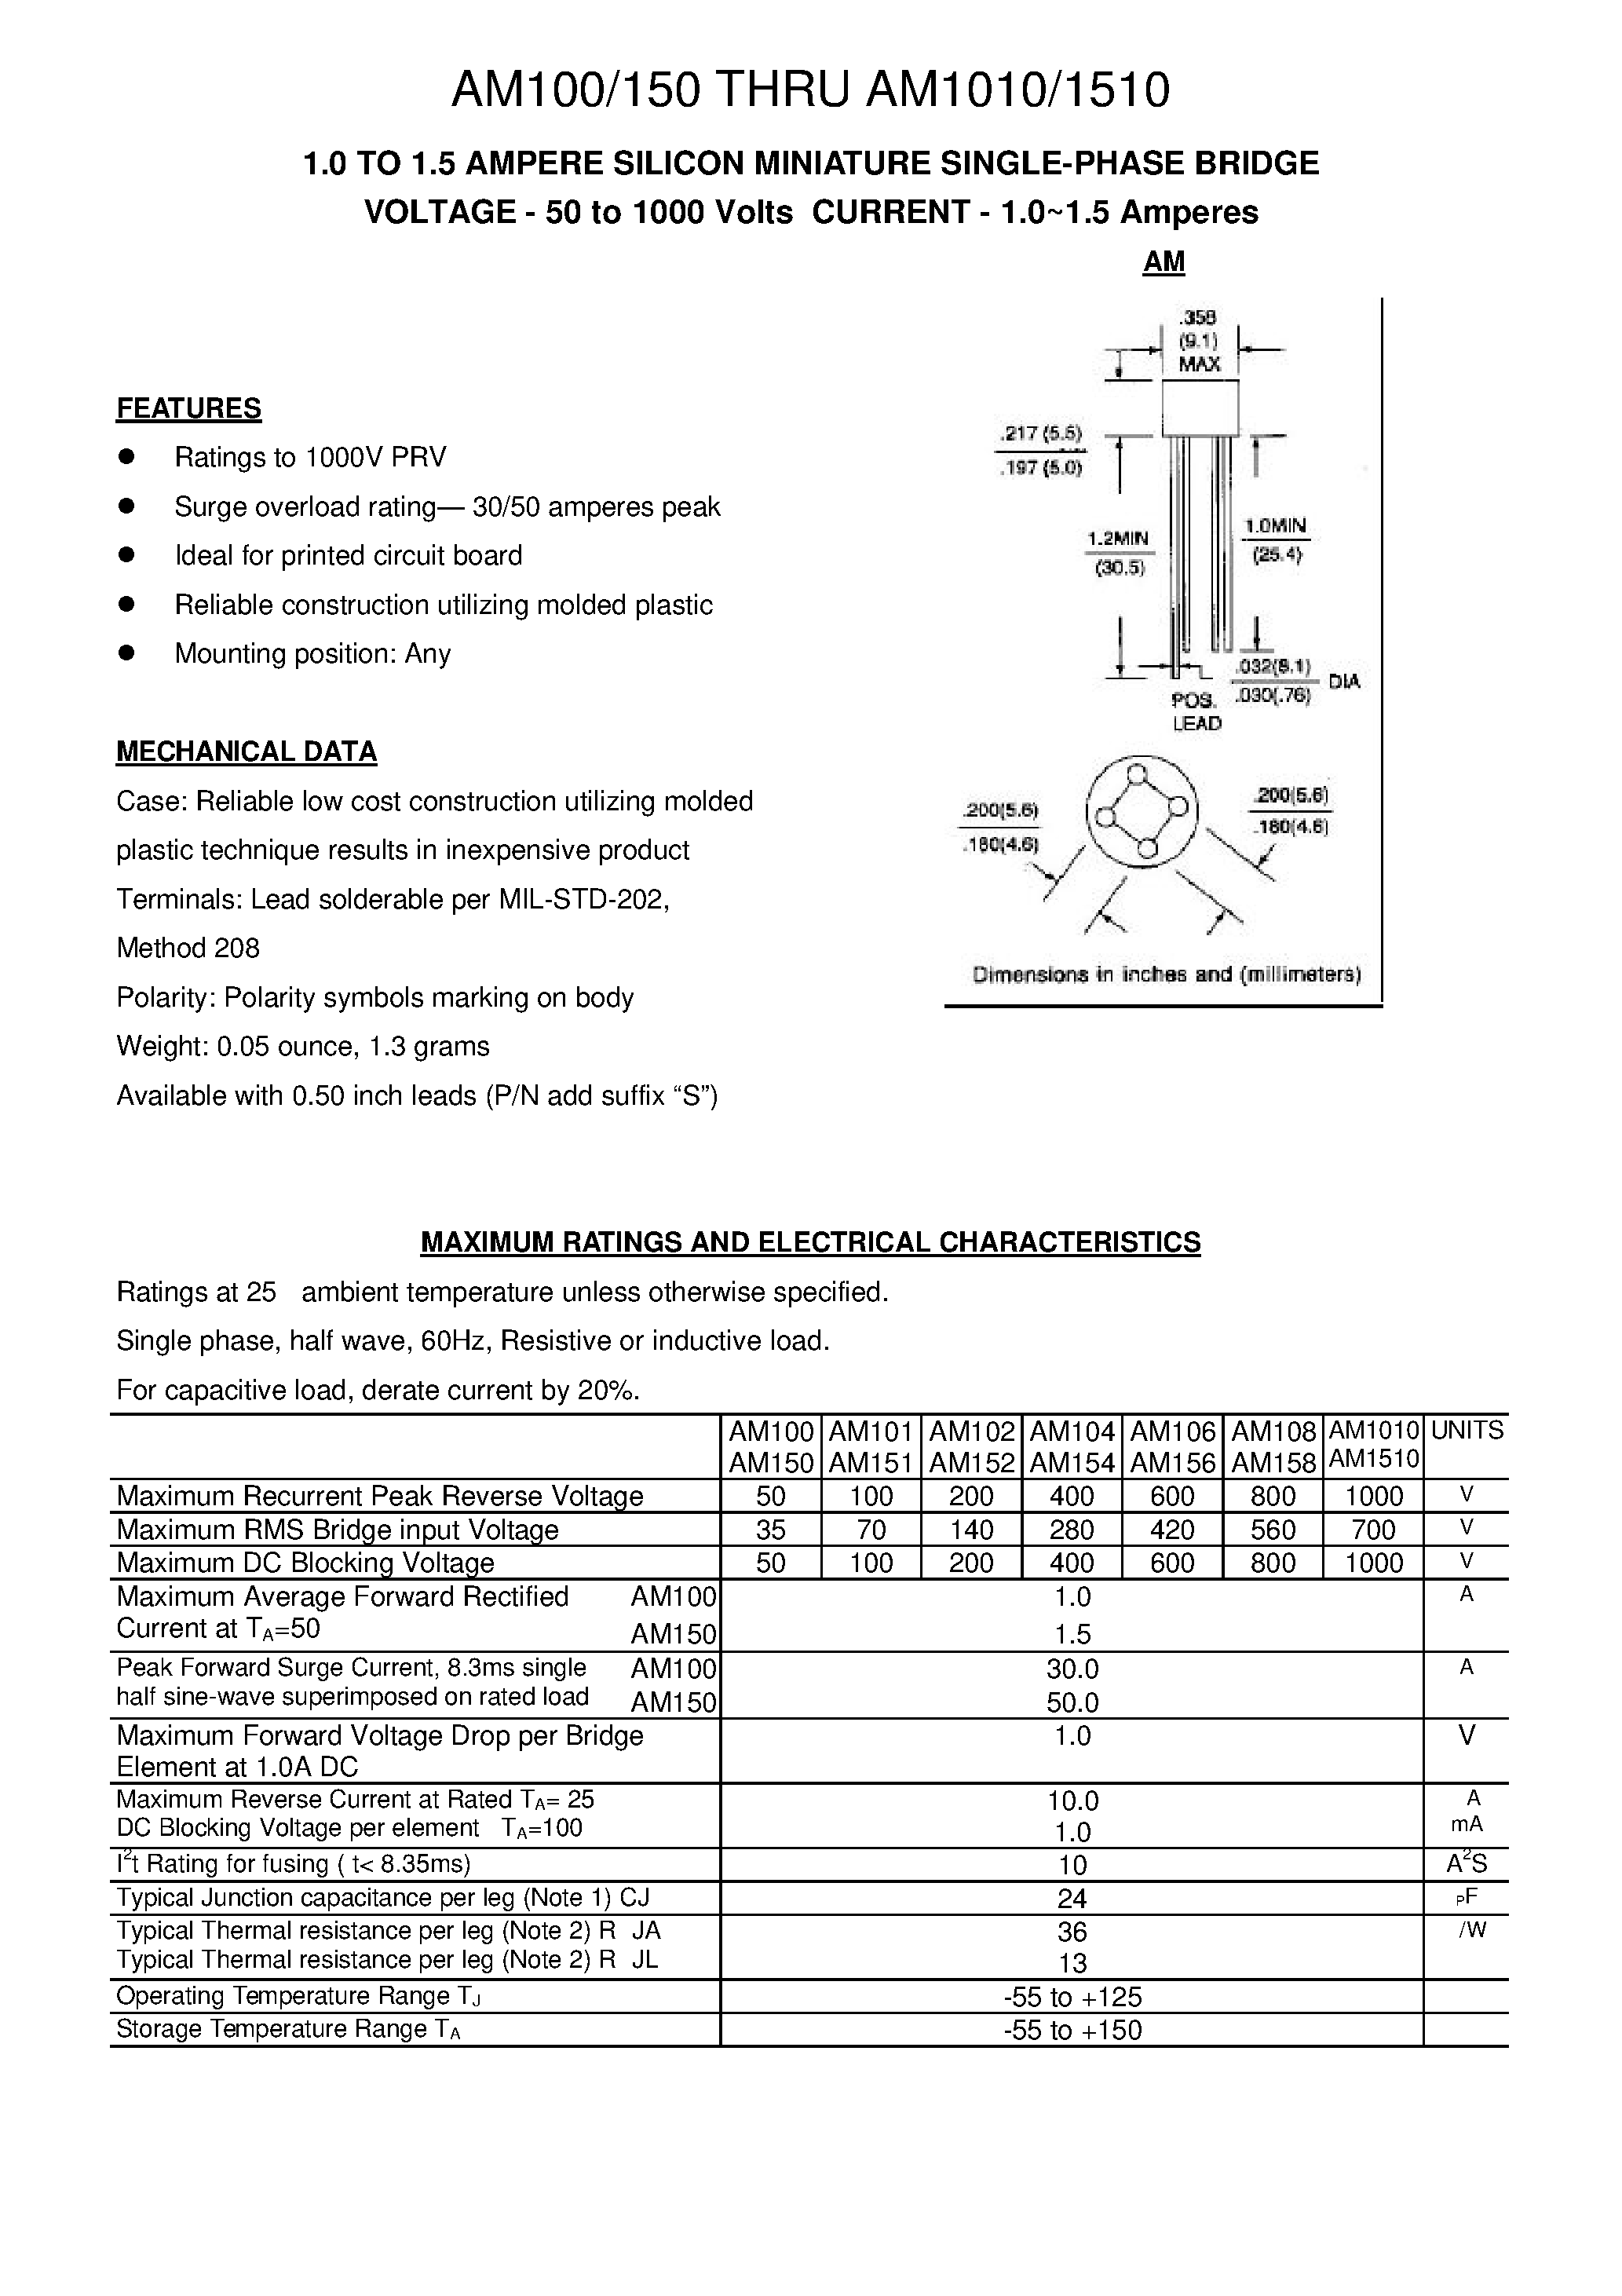 Datasheet AM108 - 1.0 TO 1.5 AMPERE SILICON MINIATURE SINGLE-PHASE BRIDGE page 1